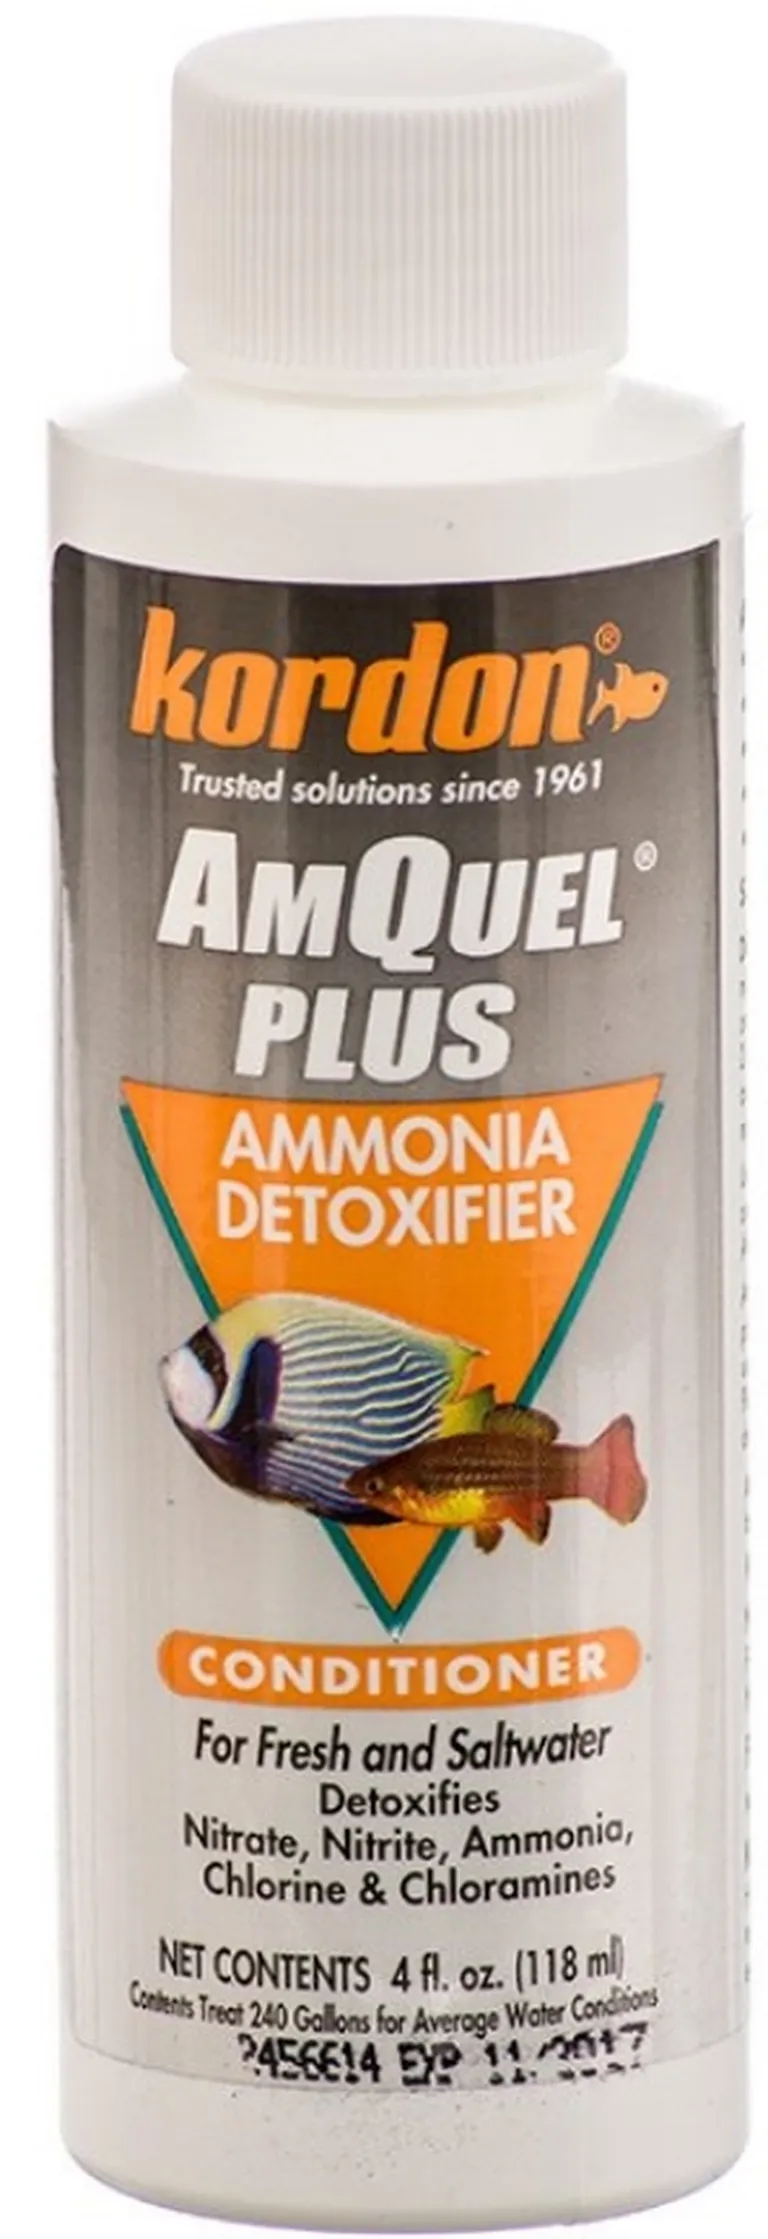 Kordon AmQuel Plus Ammonia Detoxifier Conditioner Photo 2